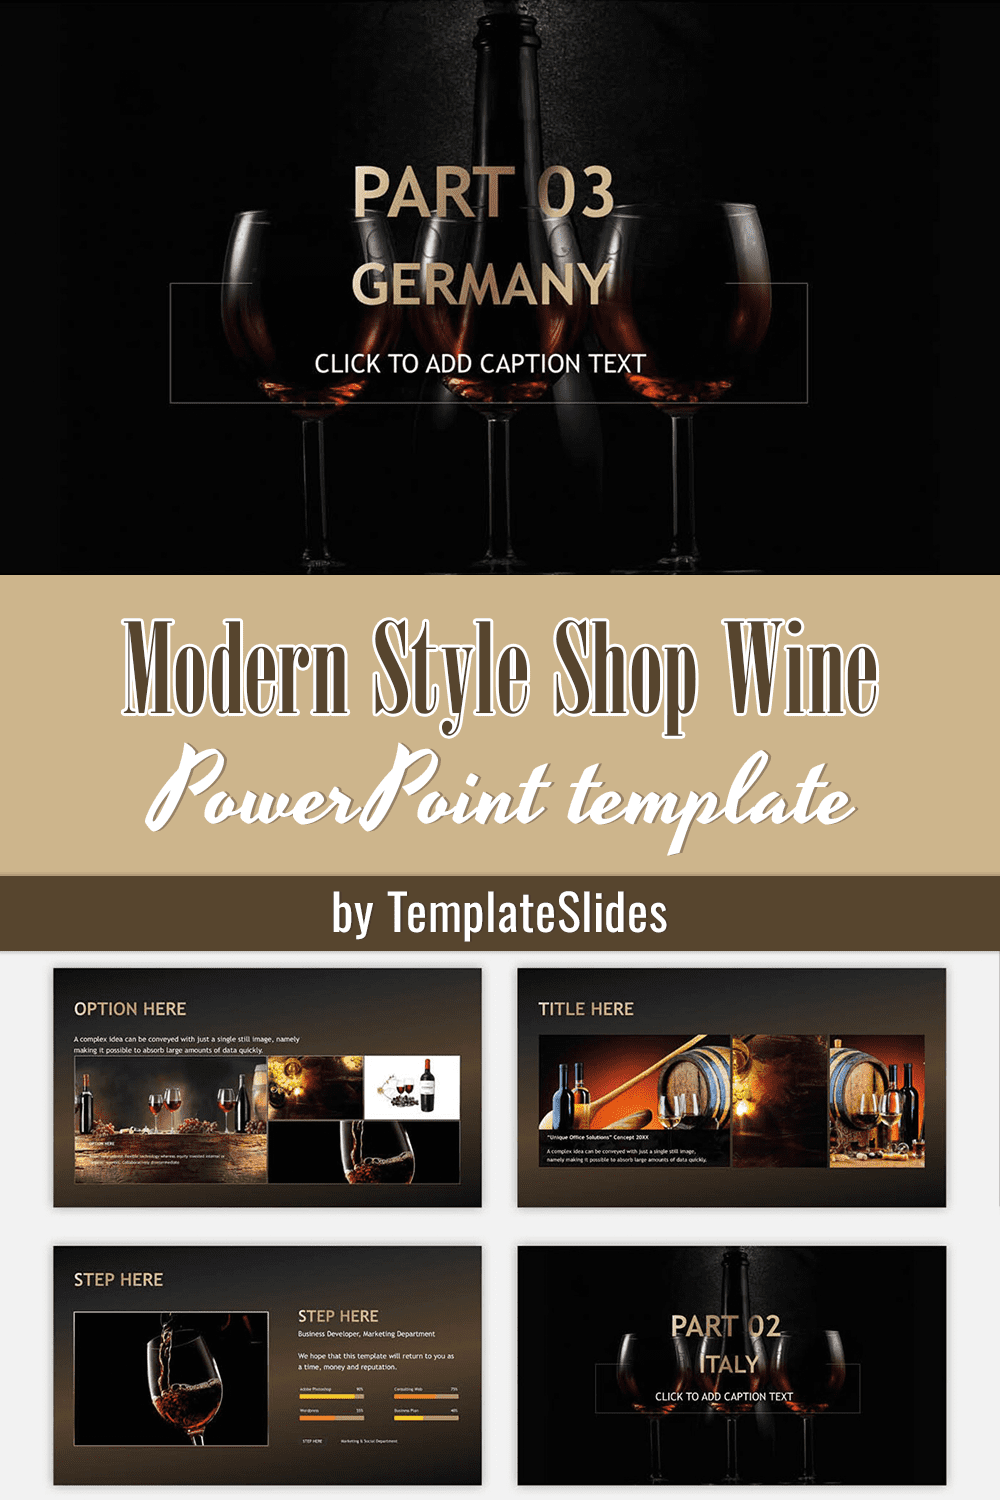 Modern Style Shop Wine PowerPoint Template - Pinterest.